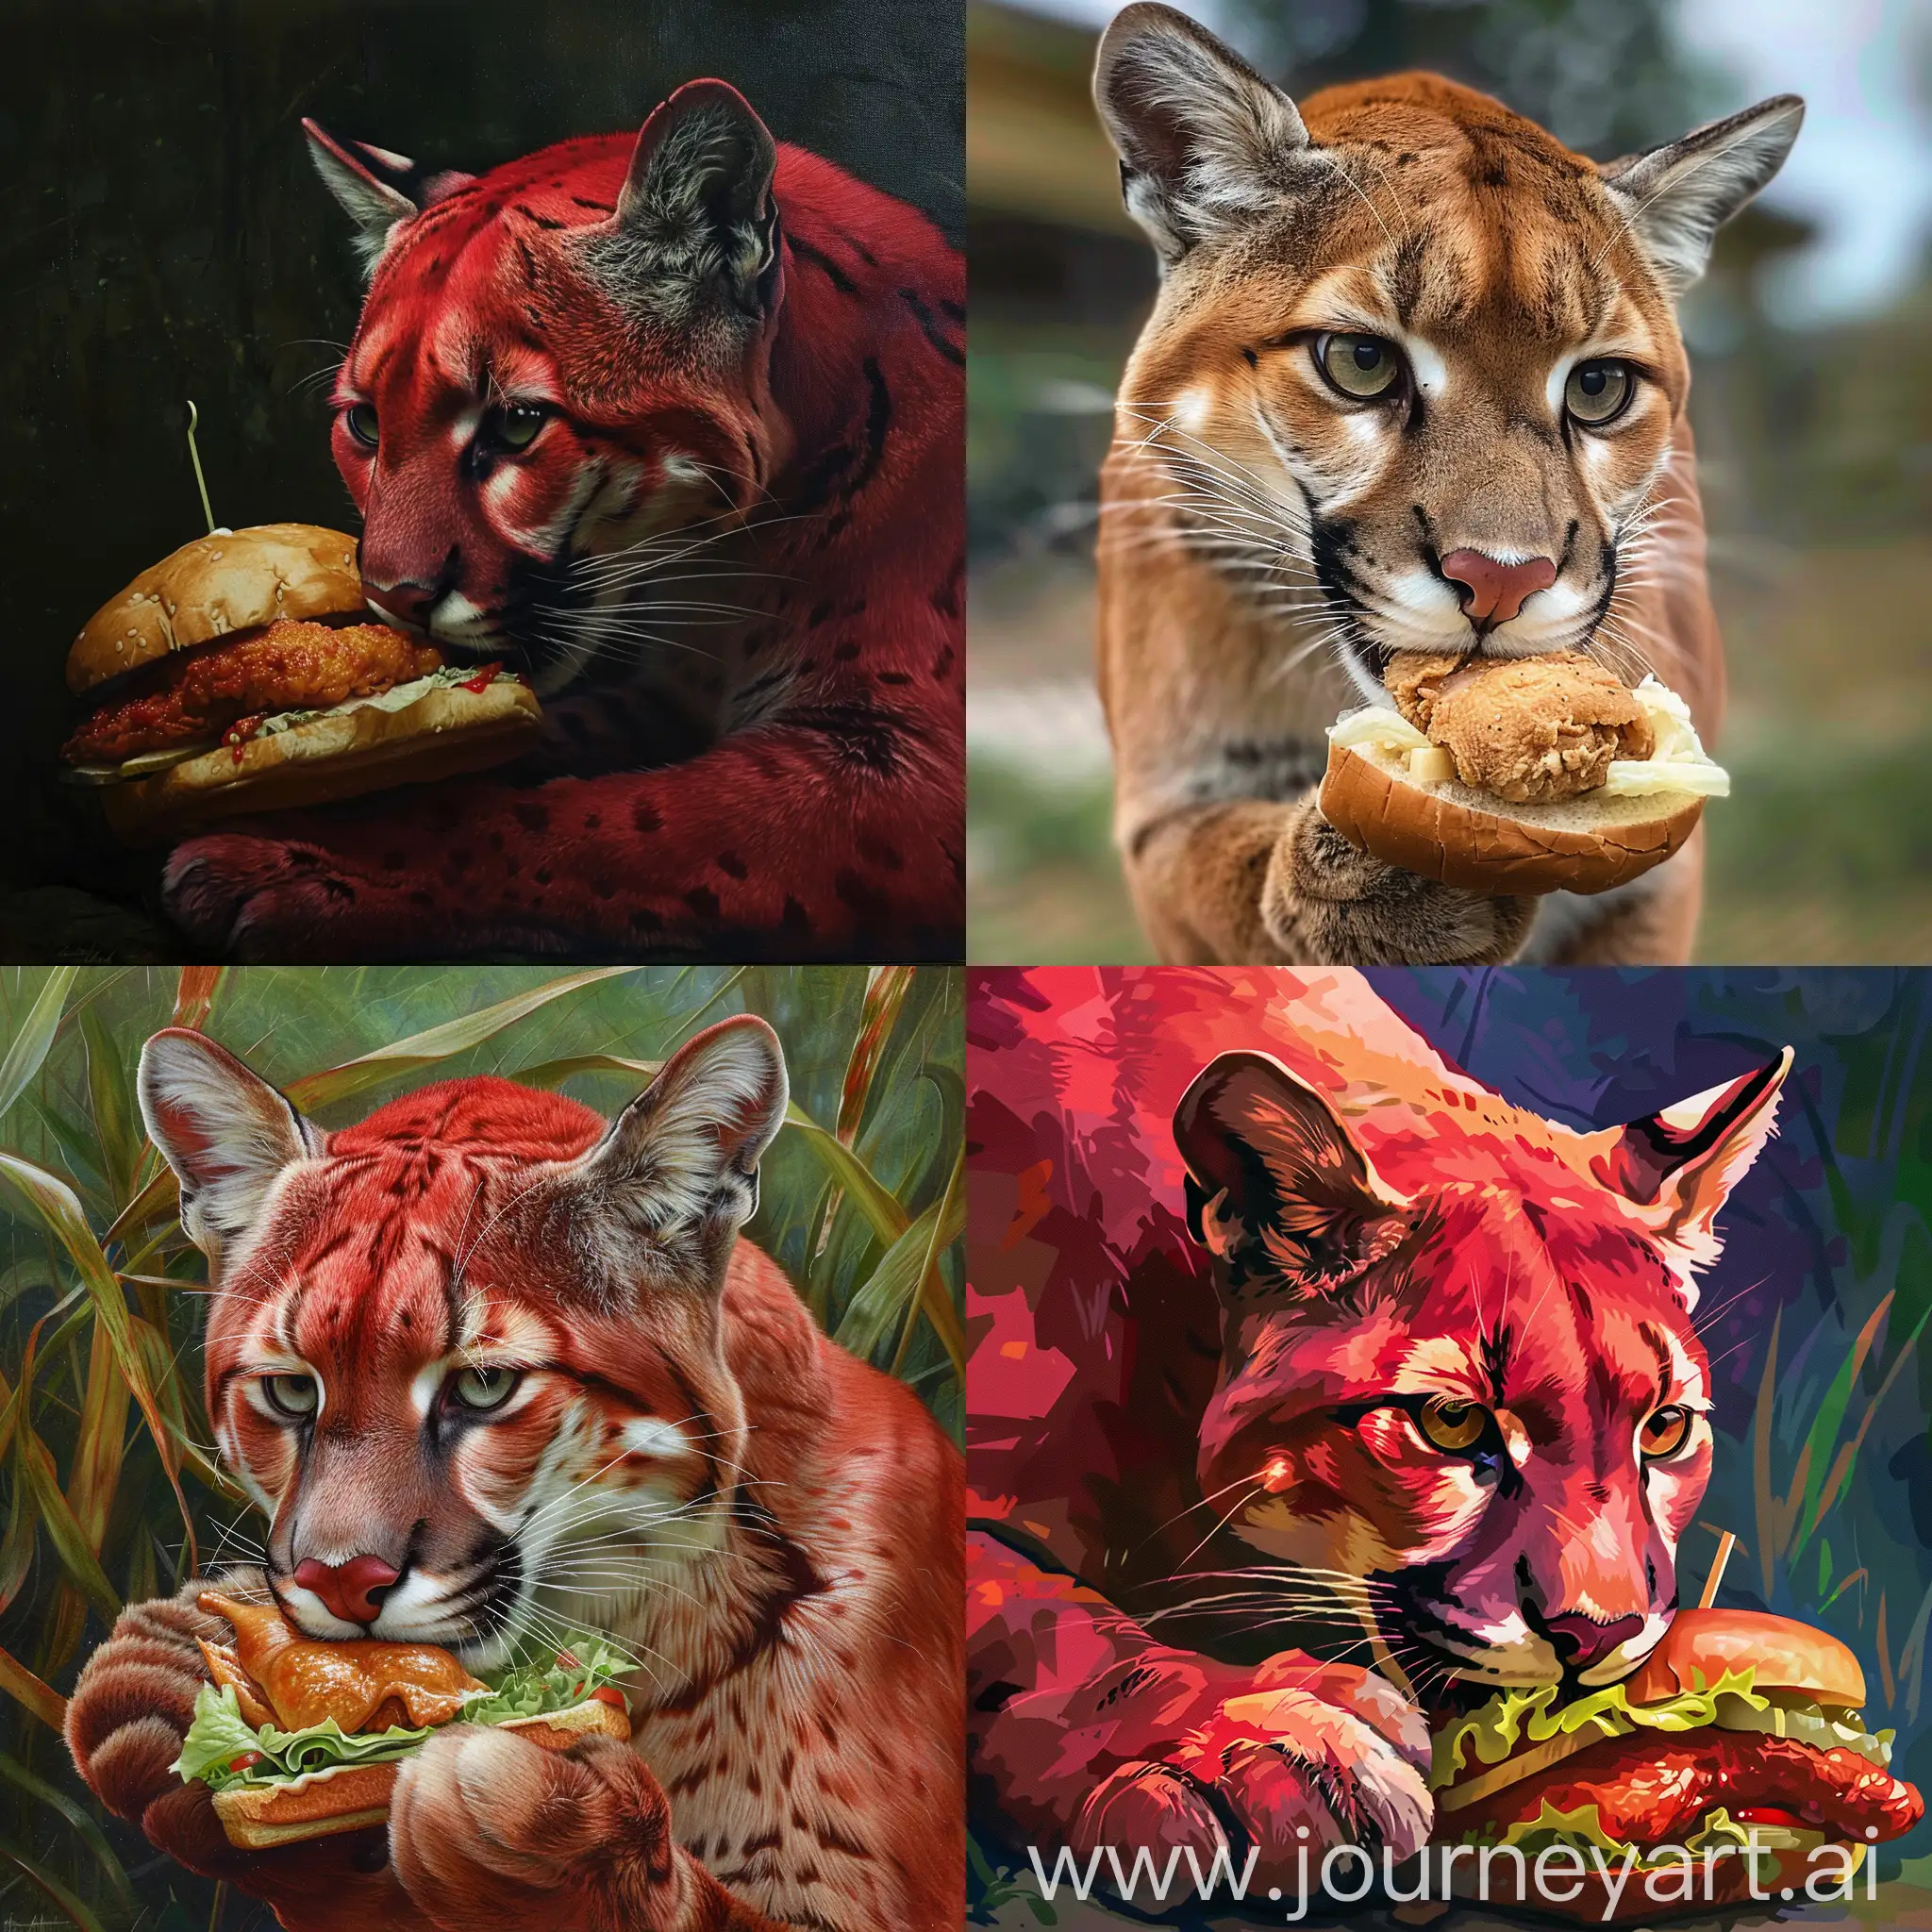 Wild-Red-Cougar-Enjoying-a-Chicken-Sandwich-Feast